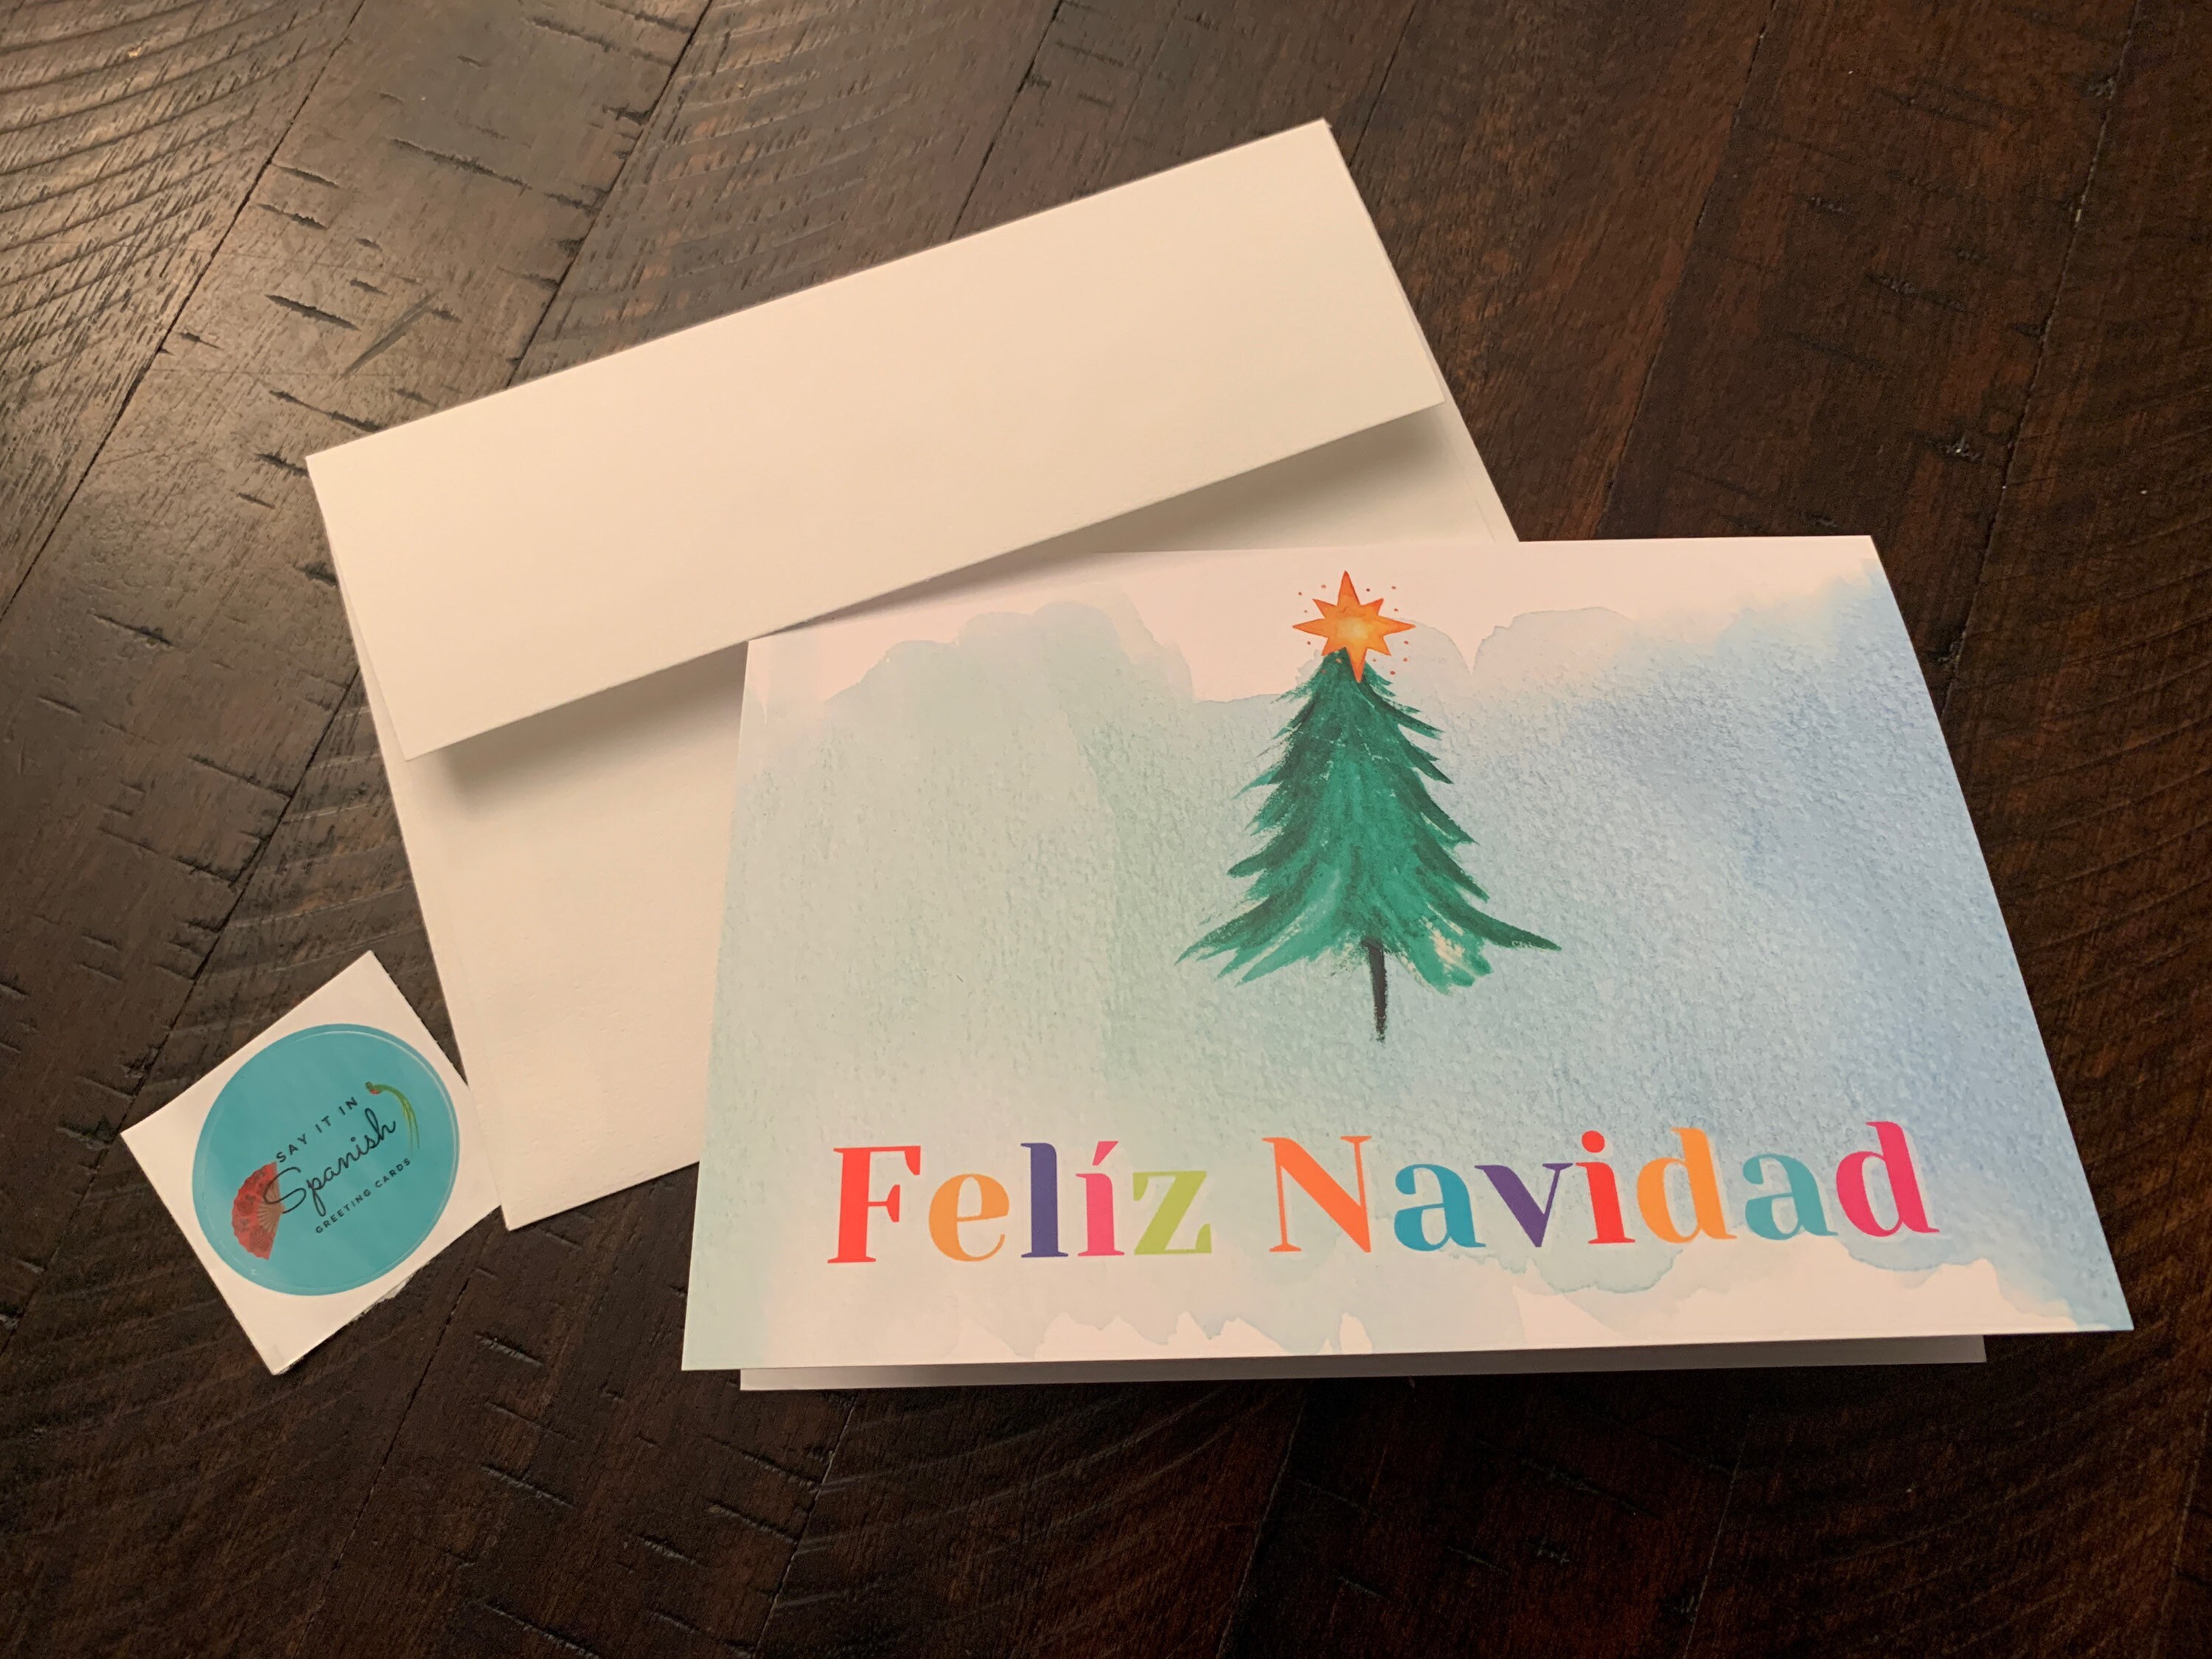 SPANISH Eye-catching Colorful Envelope Sticker Seals Encouraging